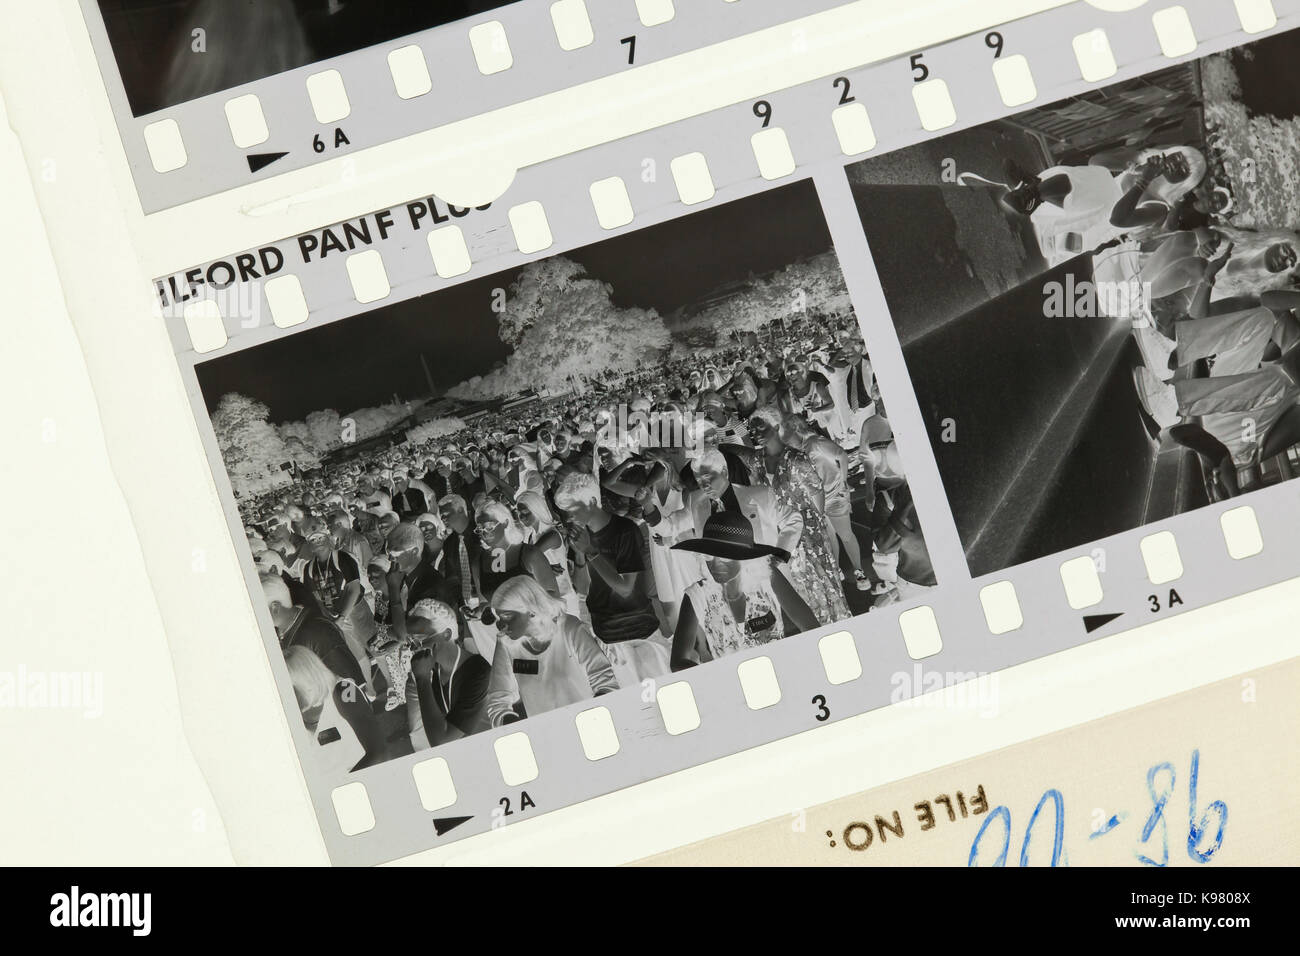 Exposed Kodak Tri-X 400 black and white negative film on light table - USA Stock Photo